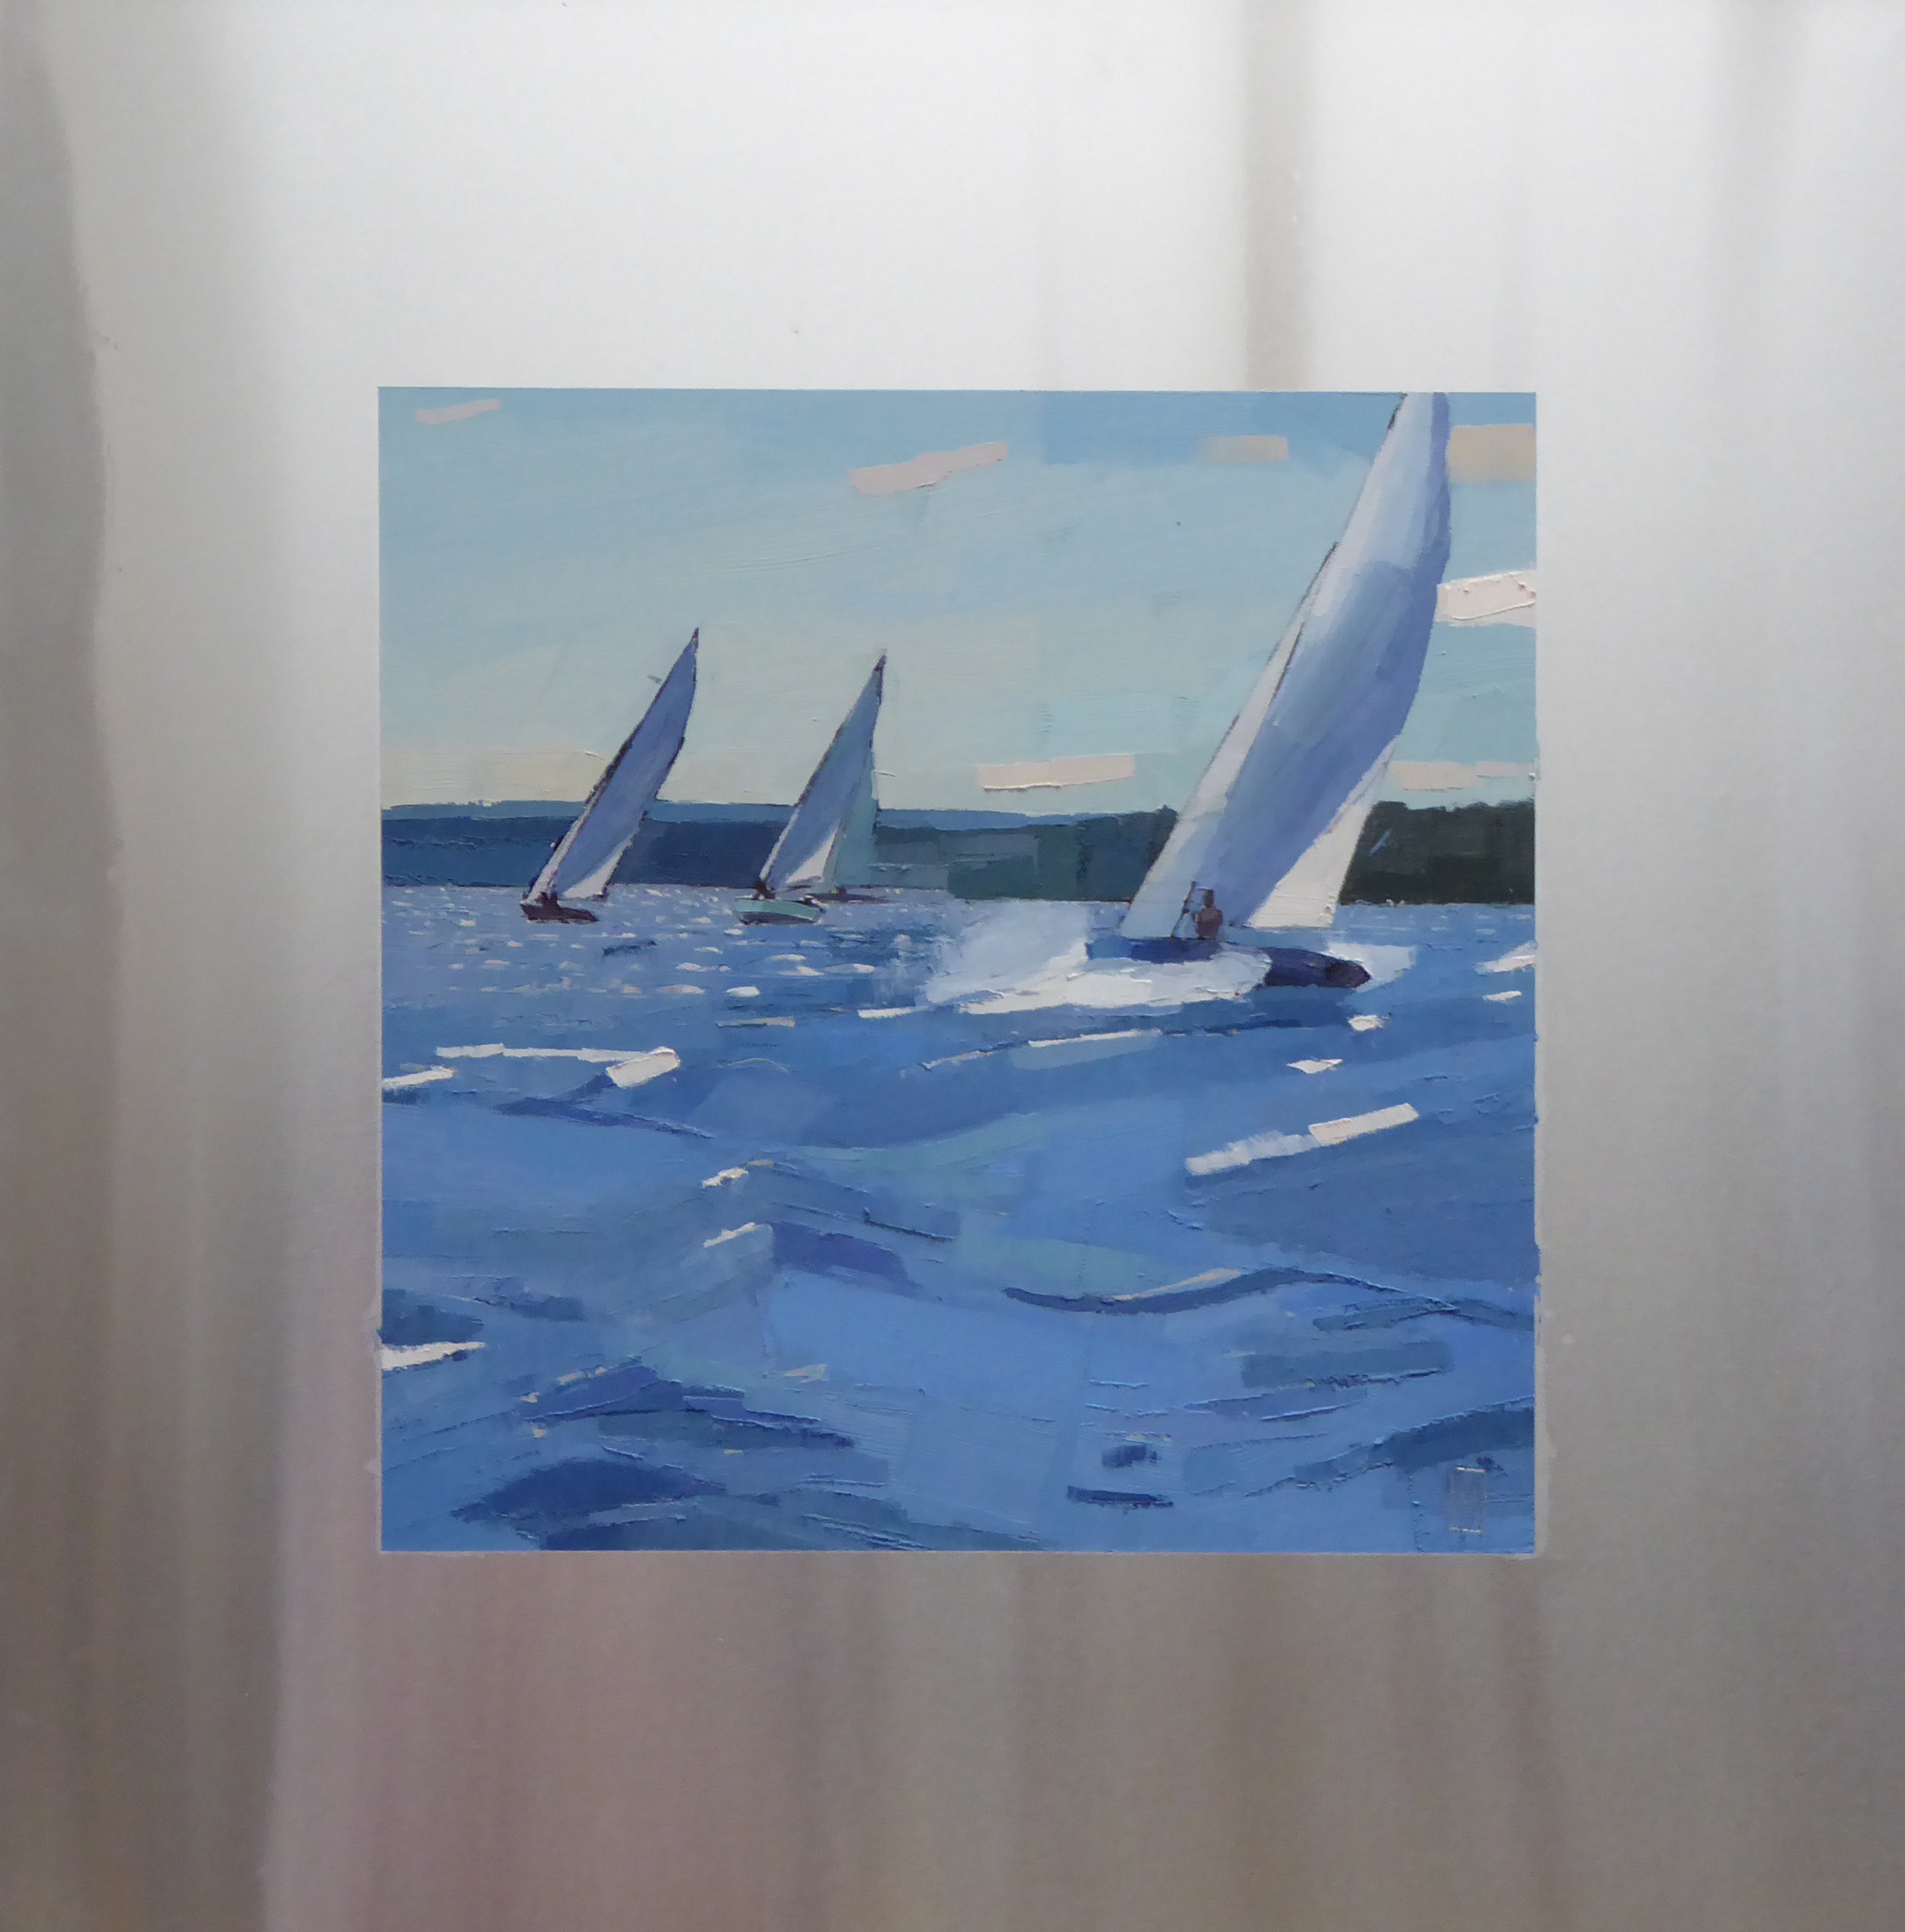   Fresh Breeze  12 x 12 oil on 20 x 20 aluminum panel   Islesford Artists Gallery   sold 